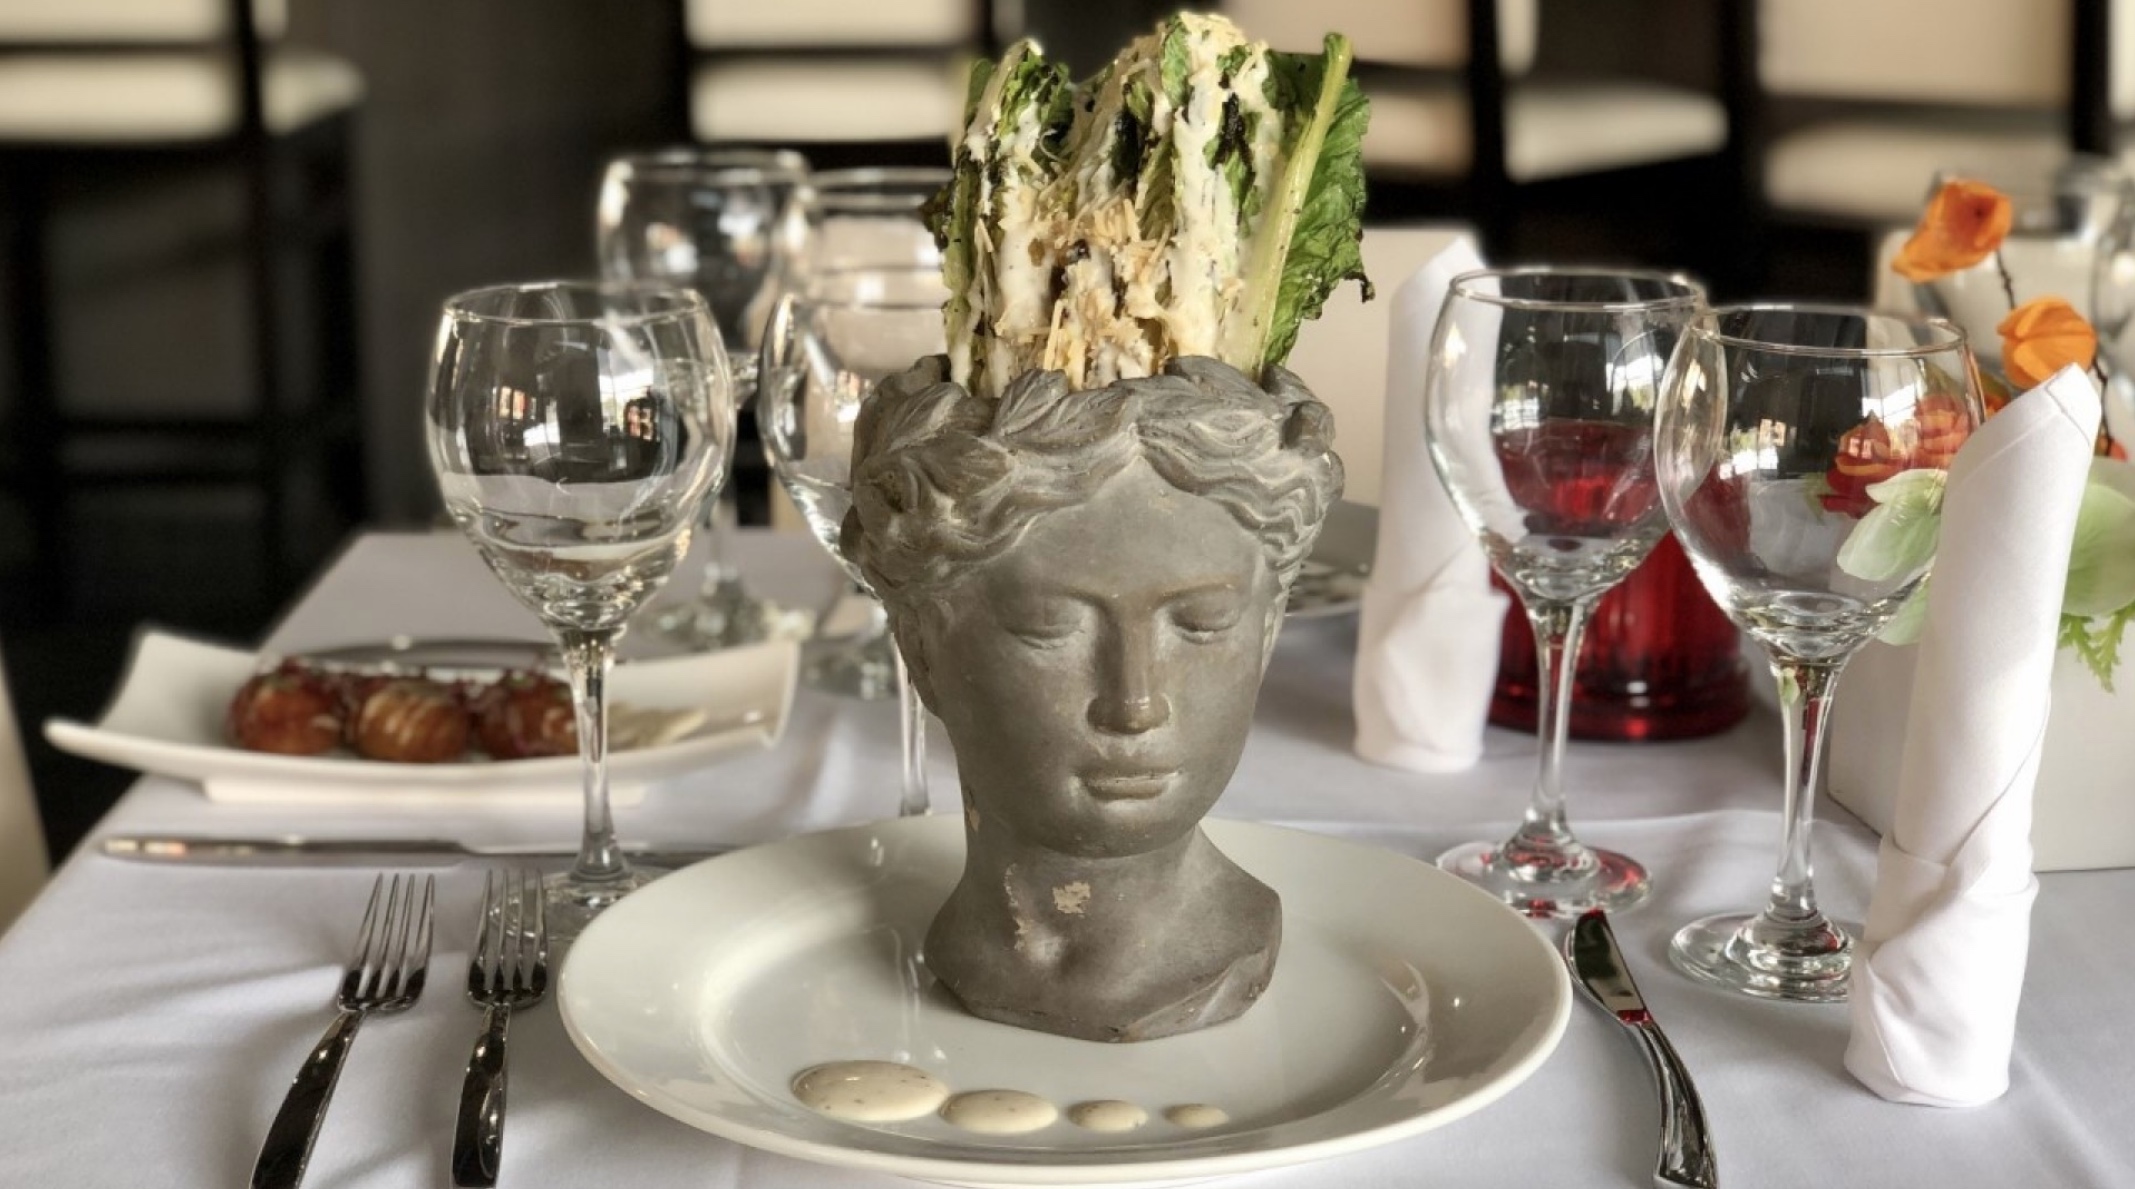 Salad served in a sculpture at Imaginate Restaurant in Royal Oak, MI photo courtesy ClickOnDetroit